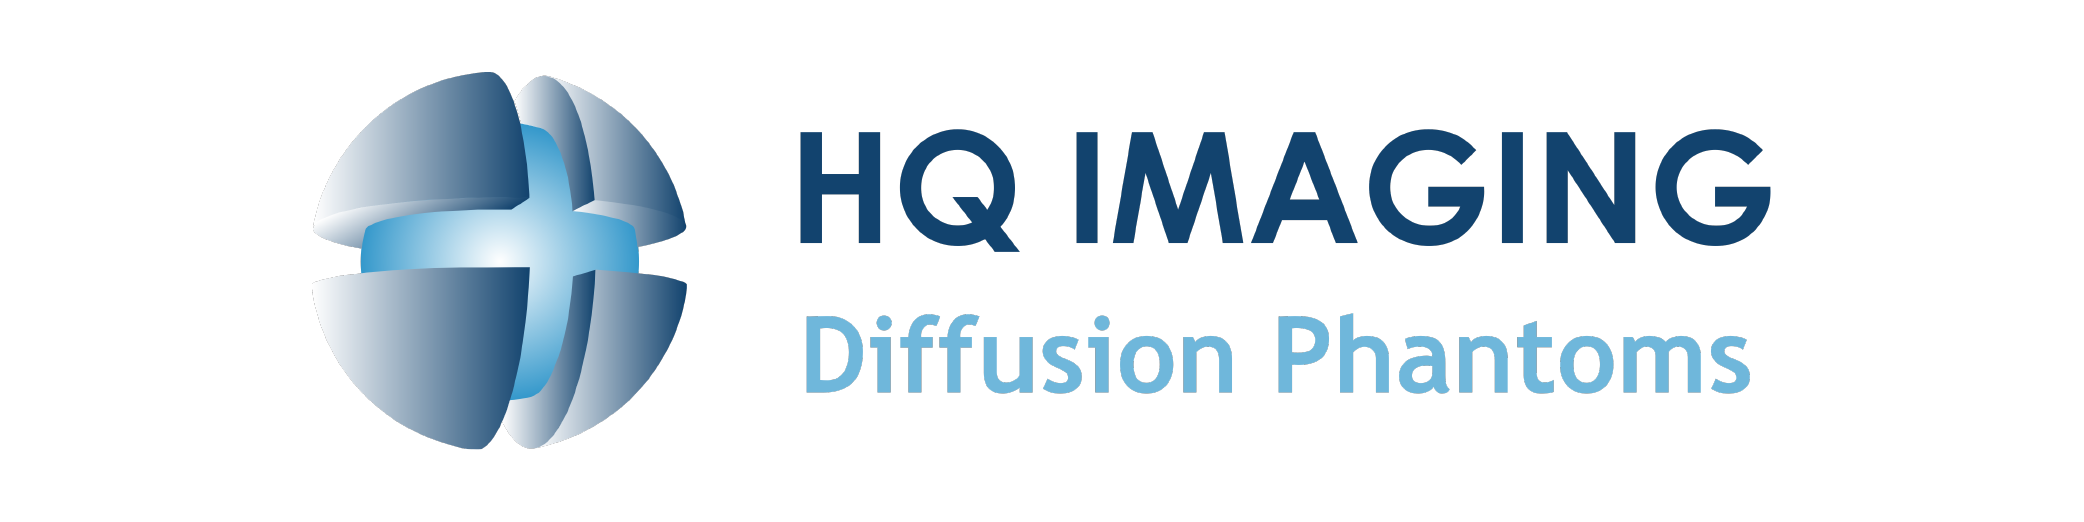 HQ Imaging Logo